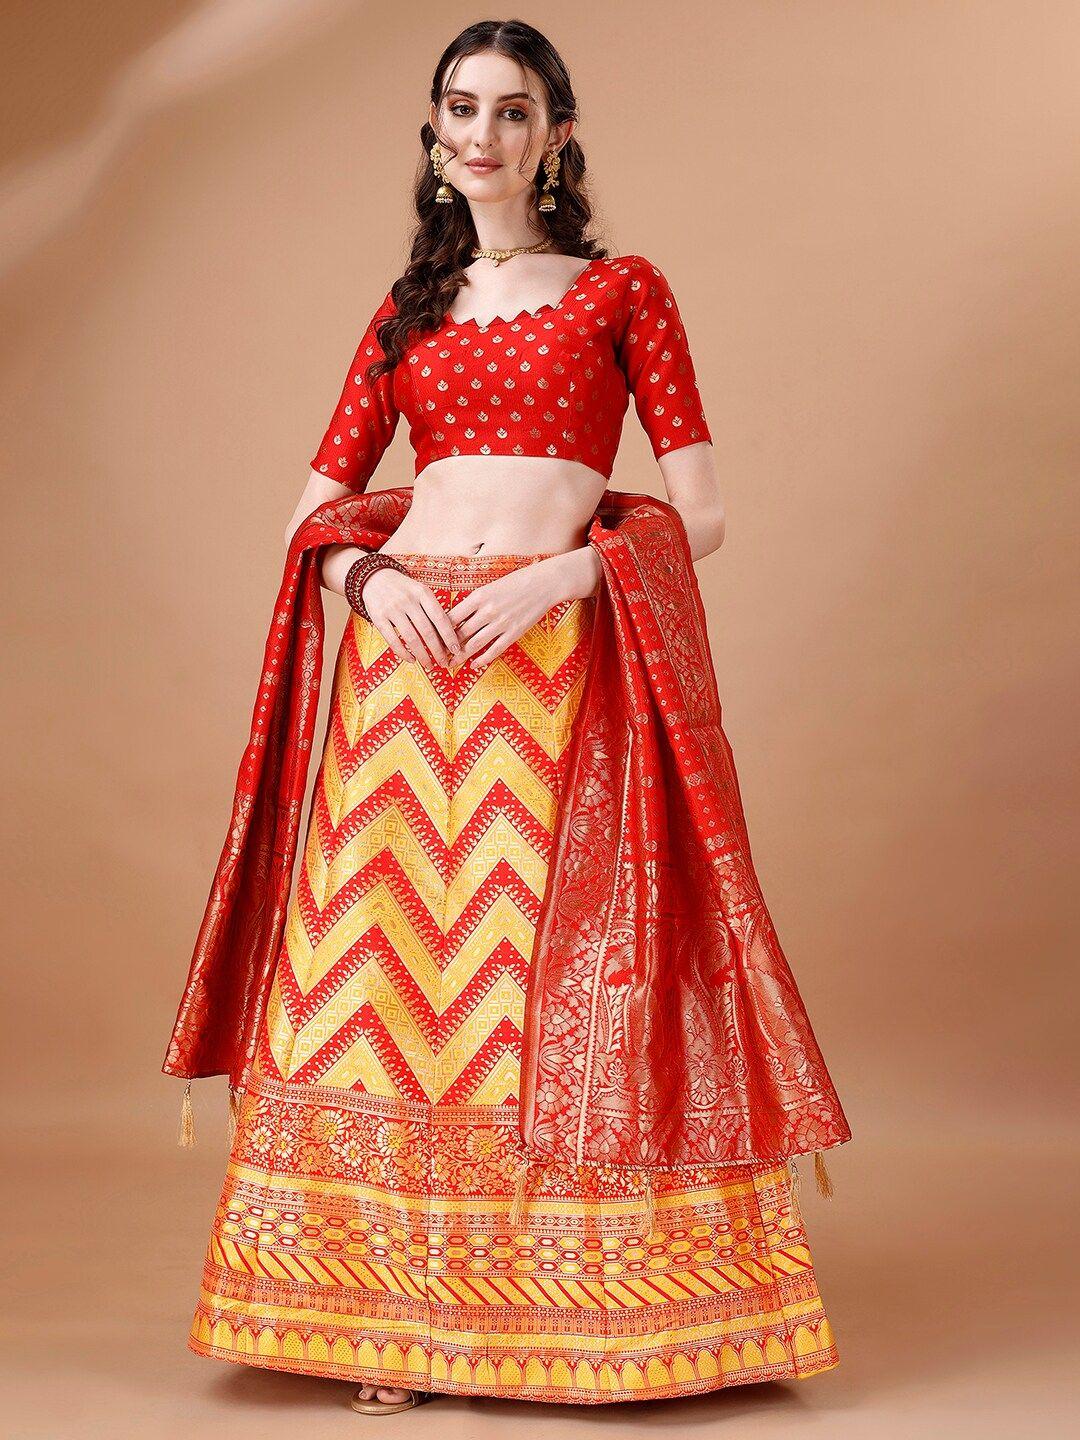 kalini semi-stitched lehenga & unstitched blouse with dupatta